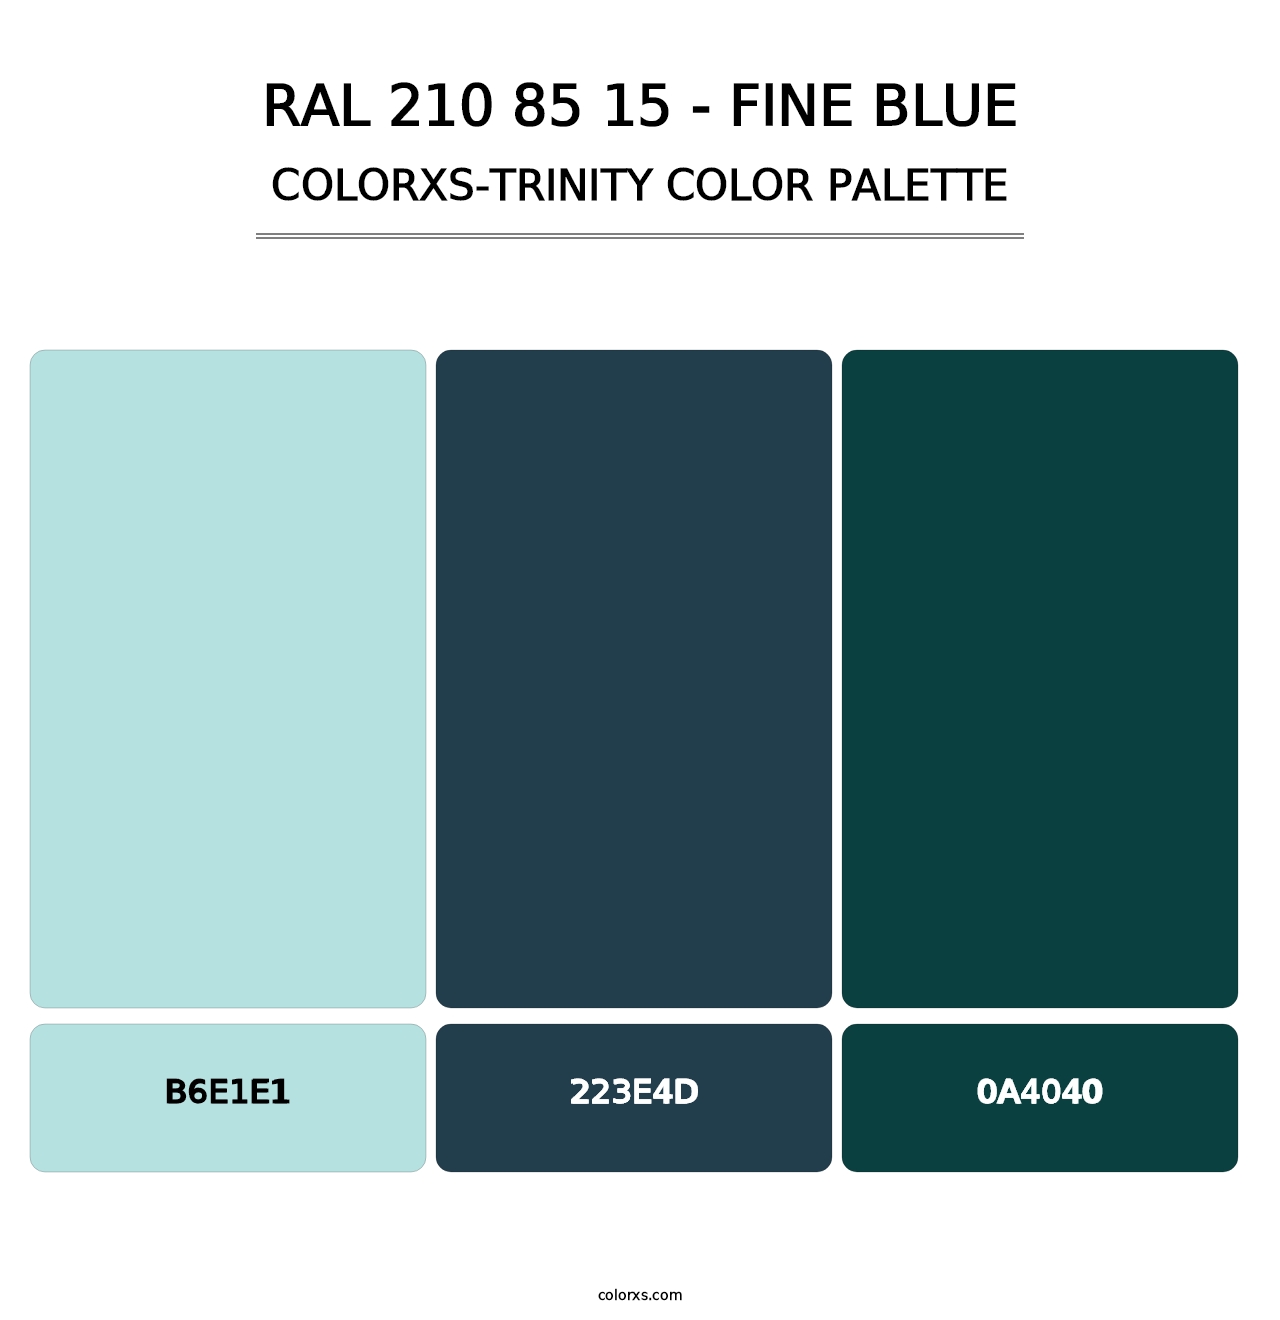 RAL 210 85 15 - Fine Blue - Colorxs Trinity Palette